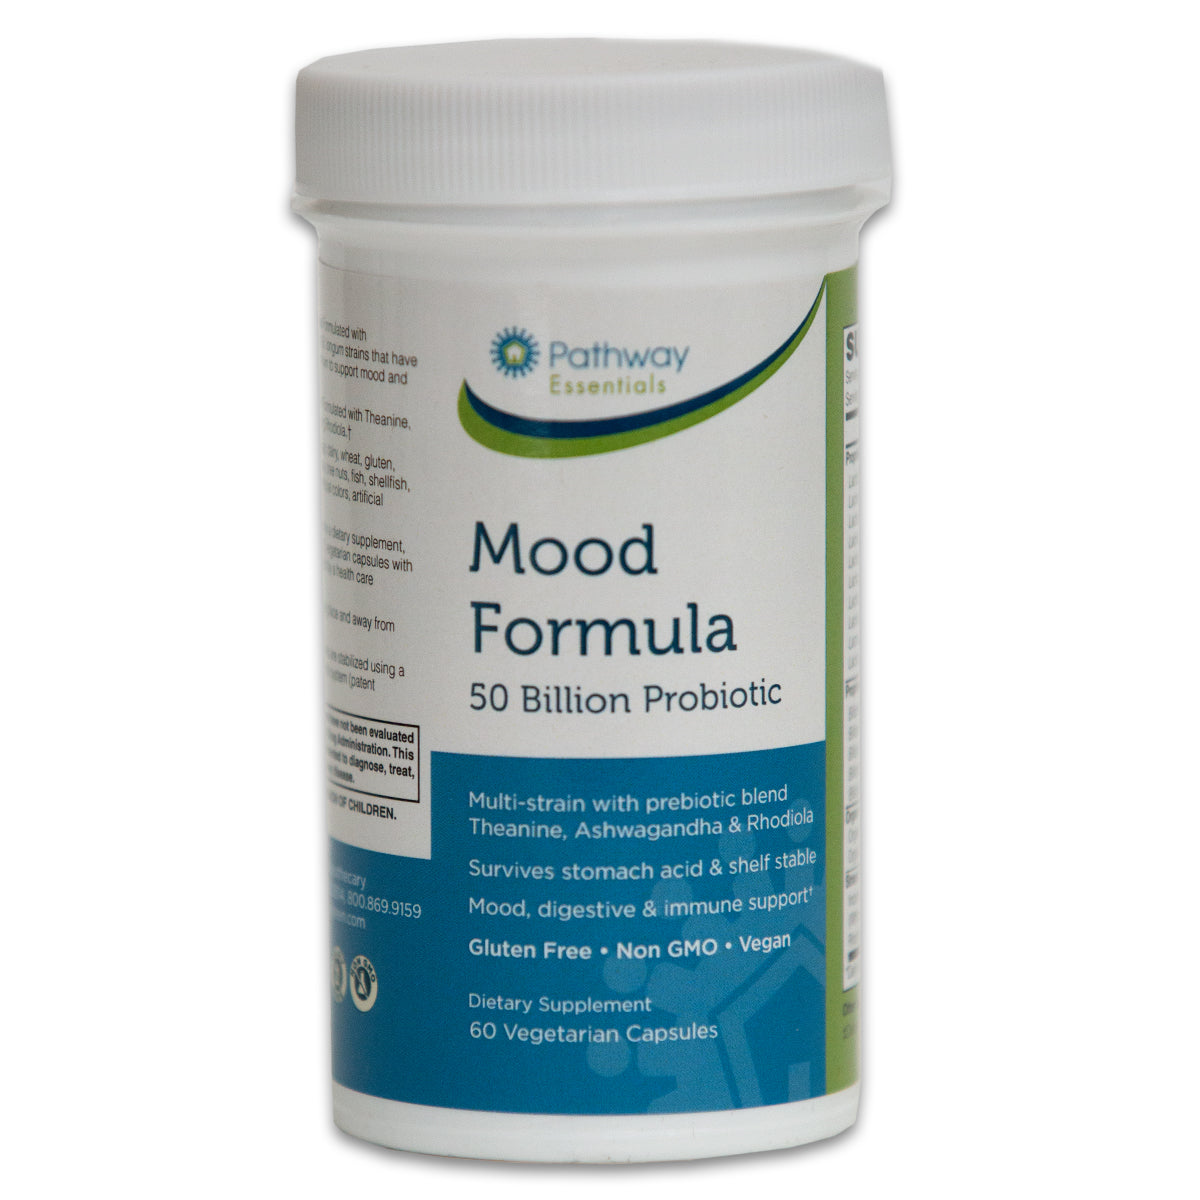 Mood Formula 50 Billion Probiotic